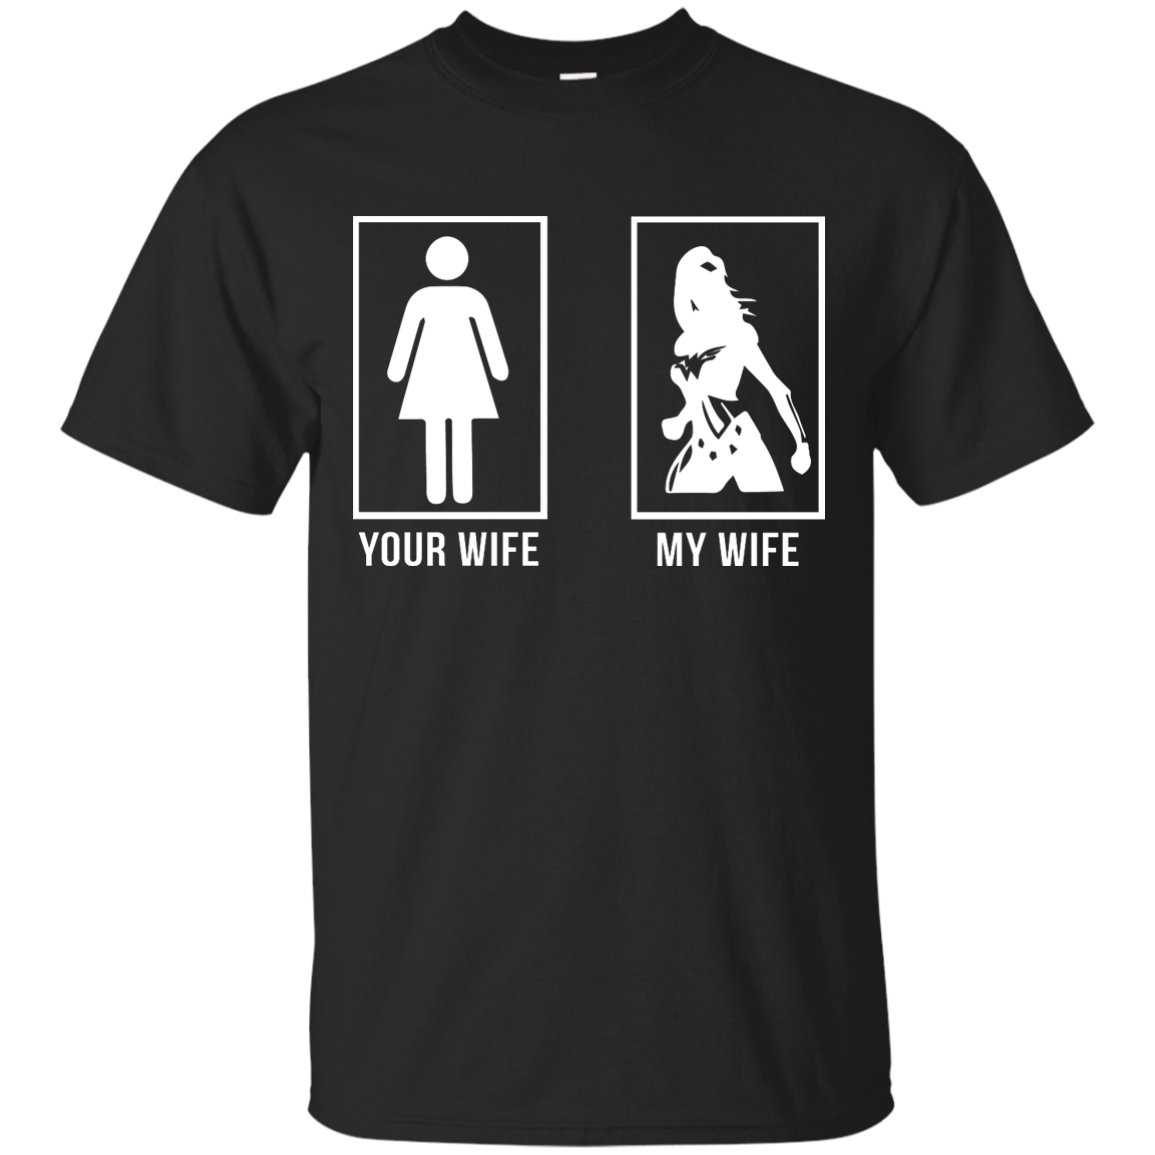 Wonder Woman: Your Wife, My Wife shirt, hoodie, tank